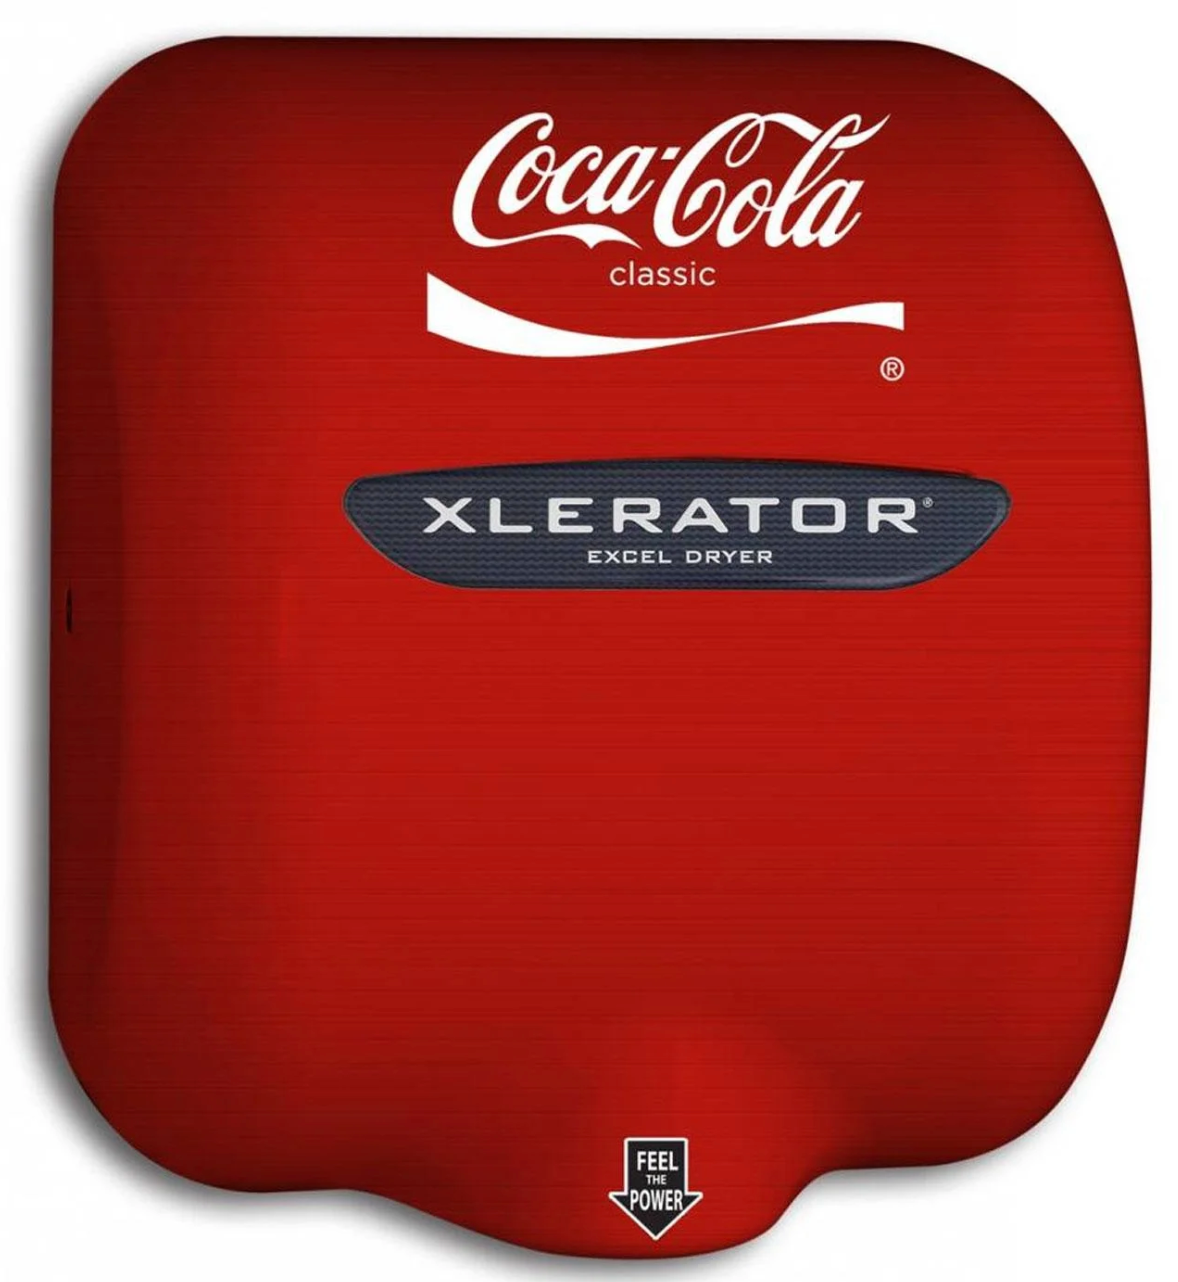 Xlerator Hand Dryer CocaCola